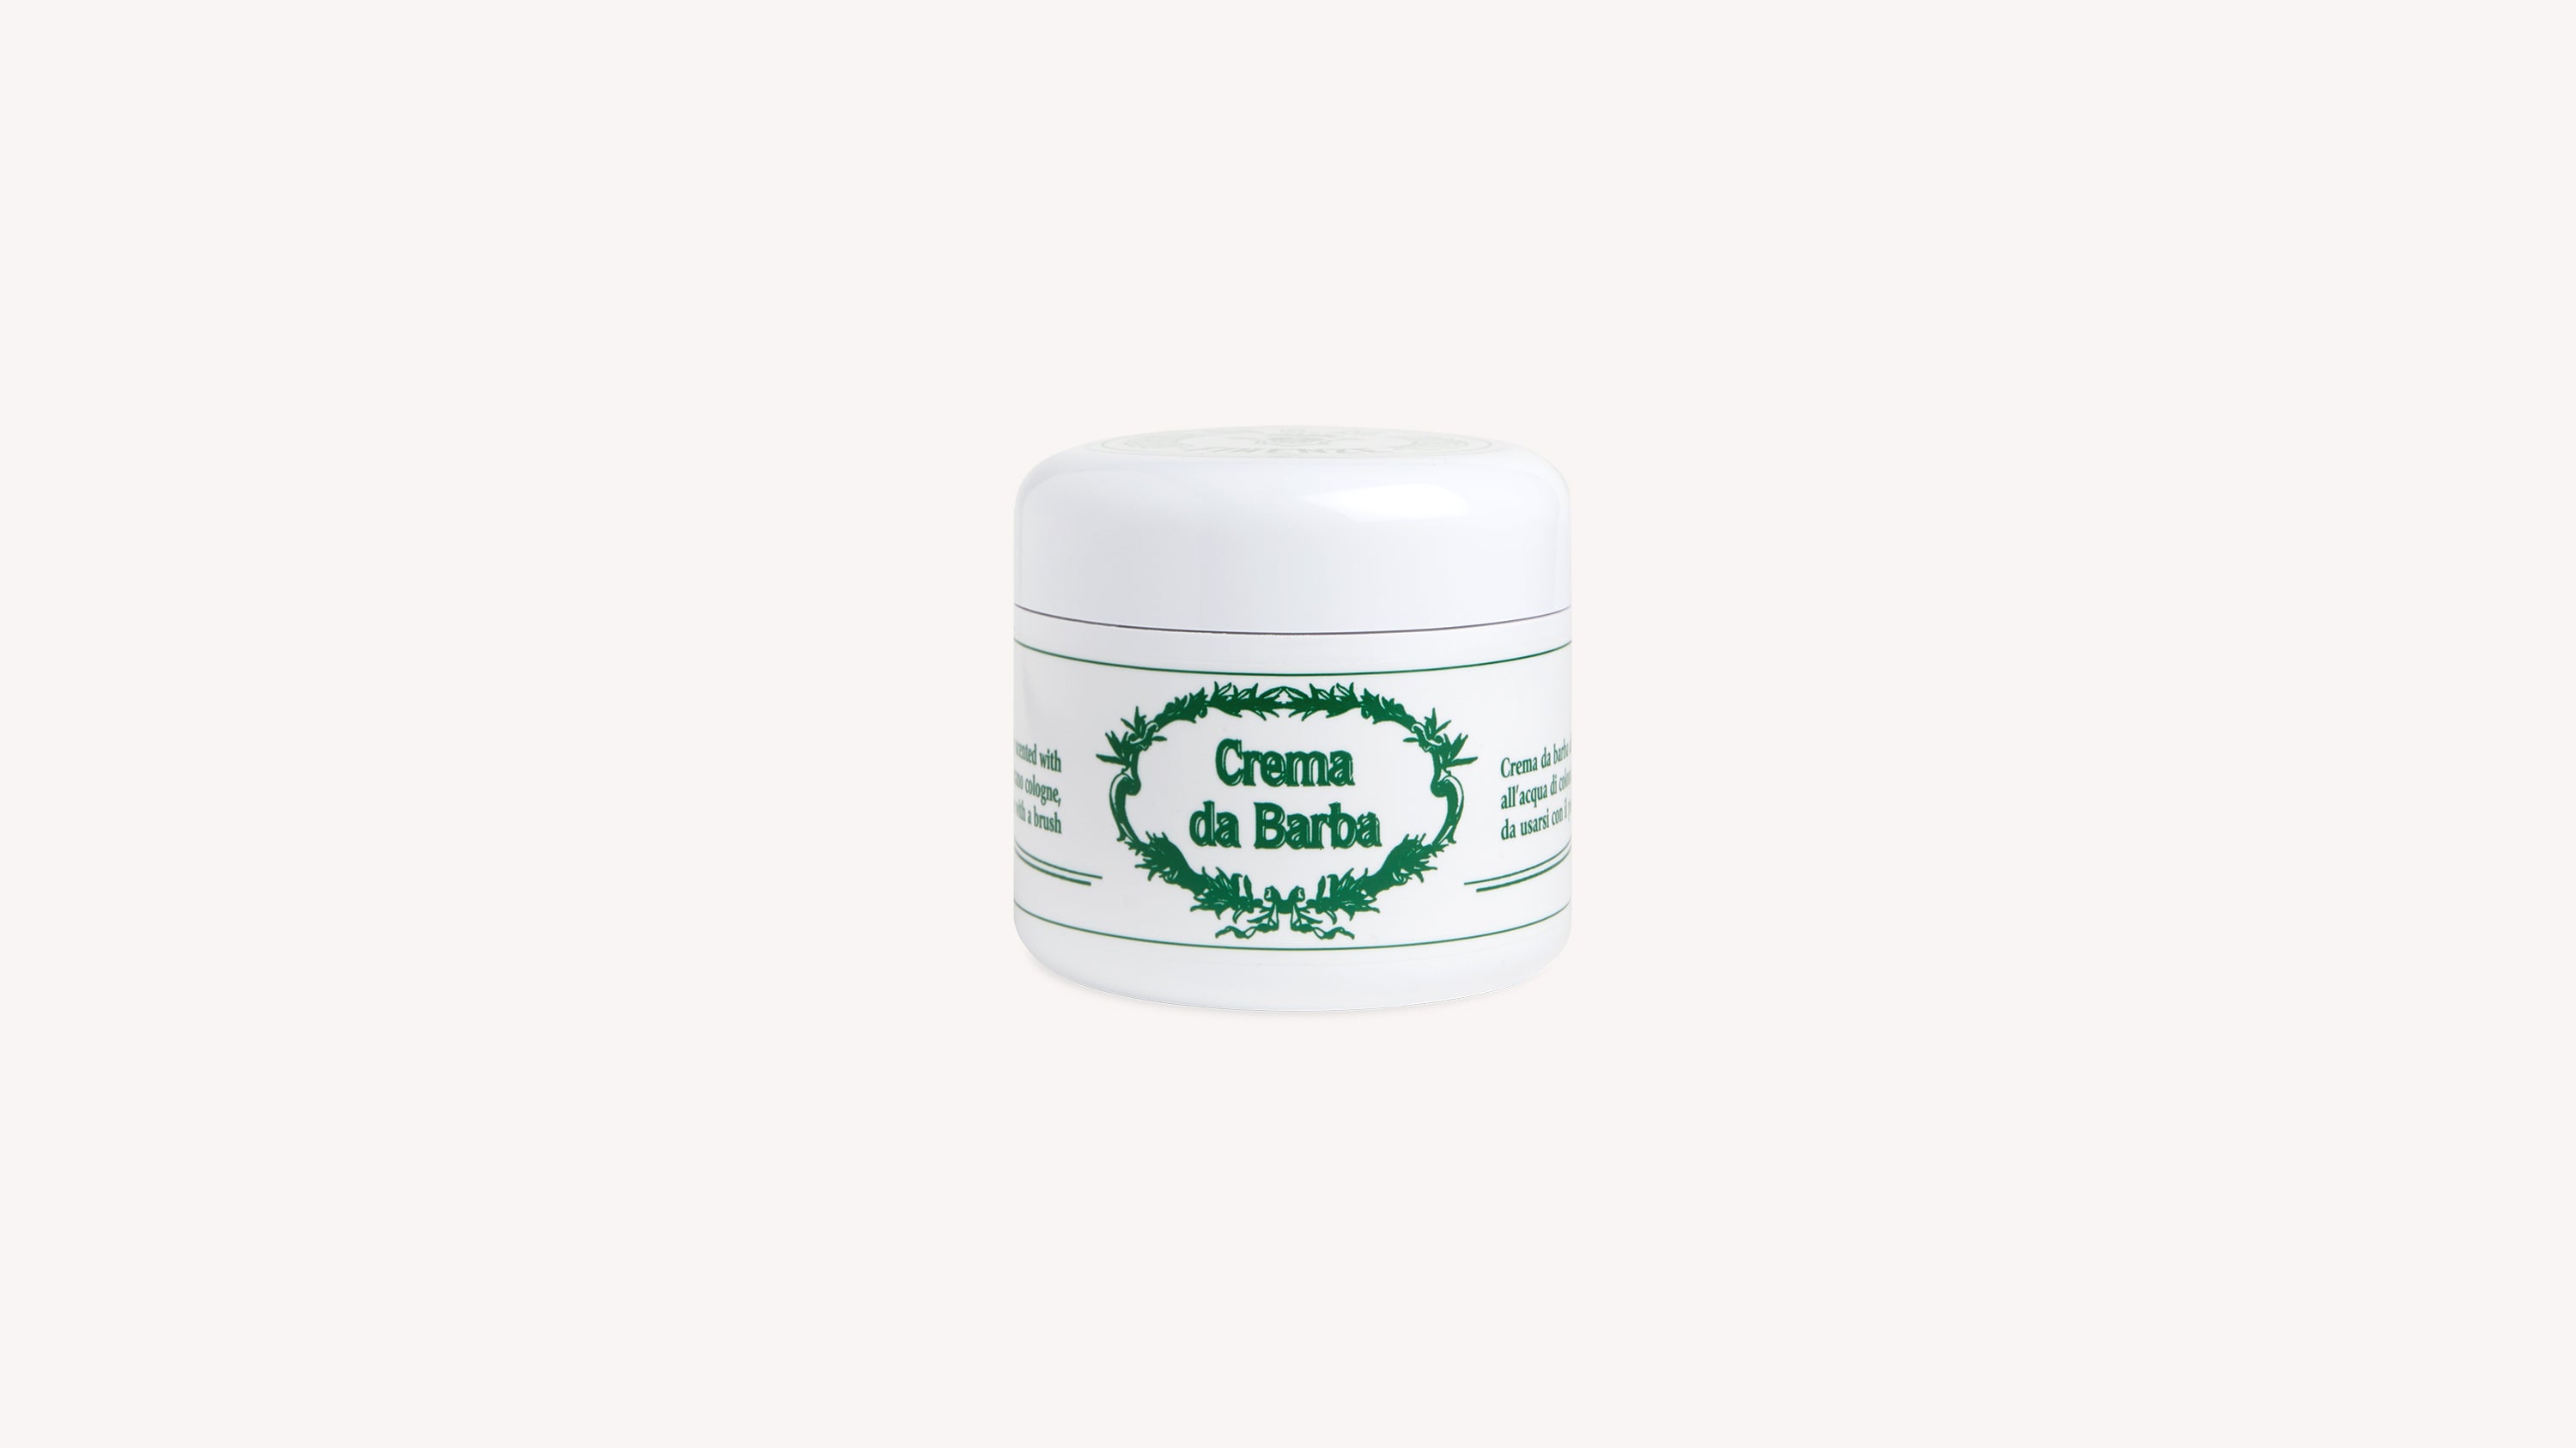 Shaving Cream Skin Care officina-smn-usa-ca.myshopify.com Officina Profumo Farmaceutica di Santa Maria Novella - US